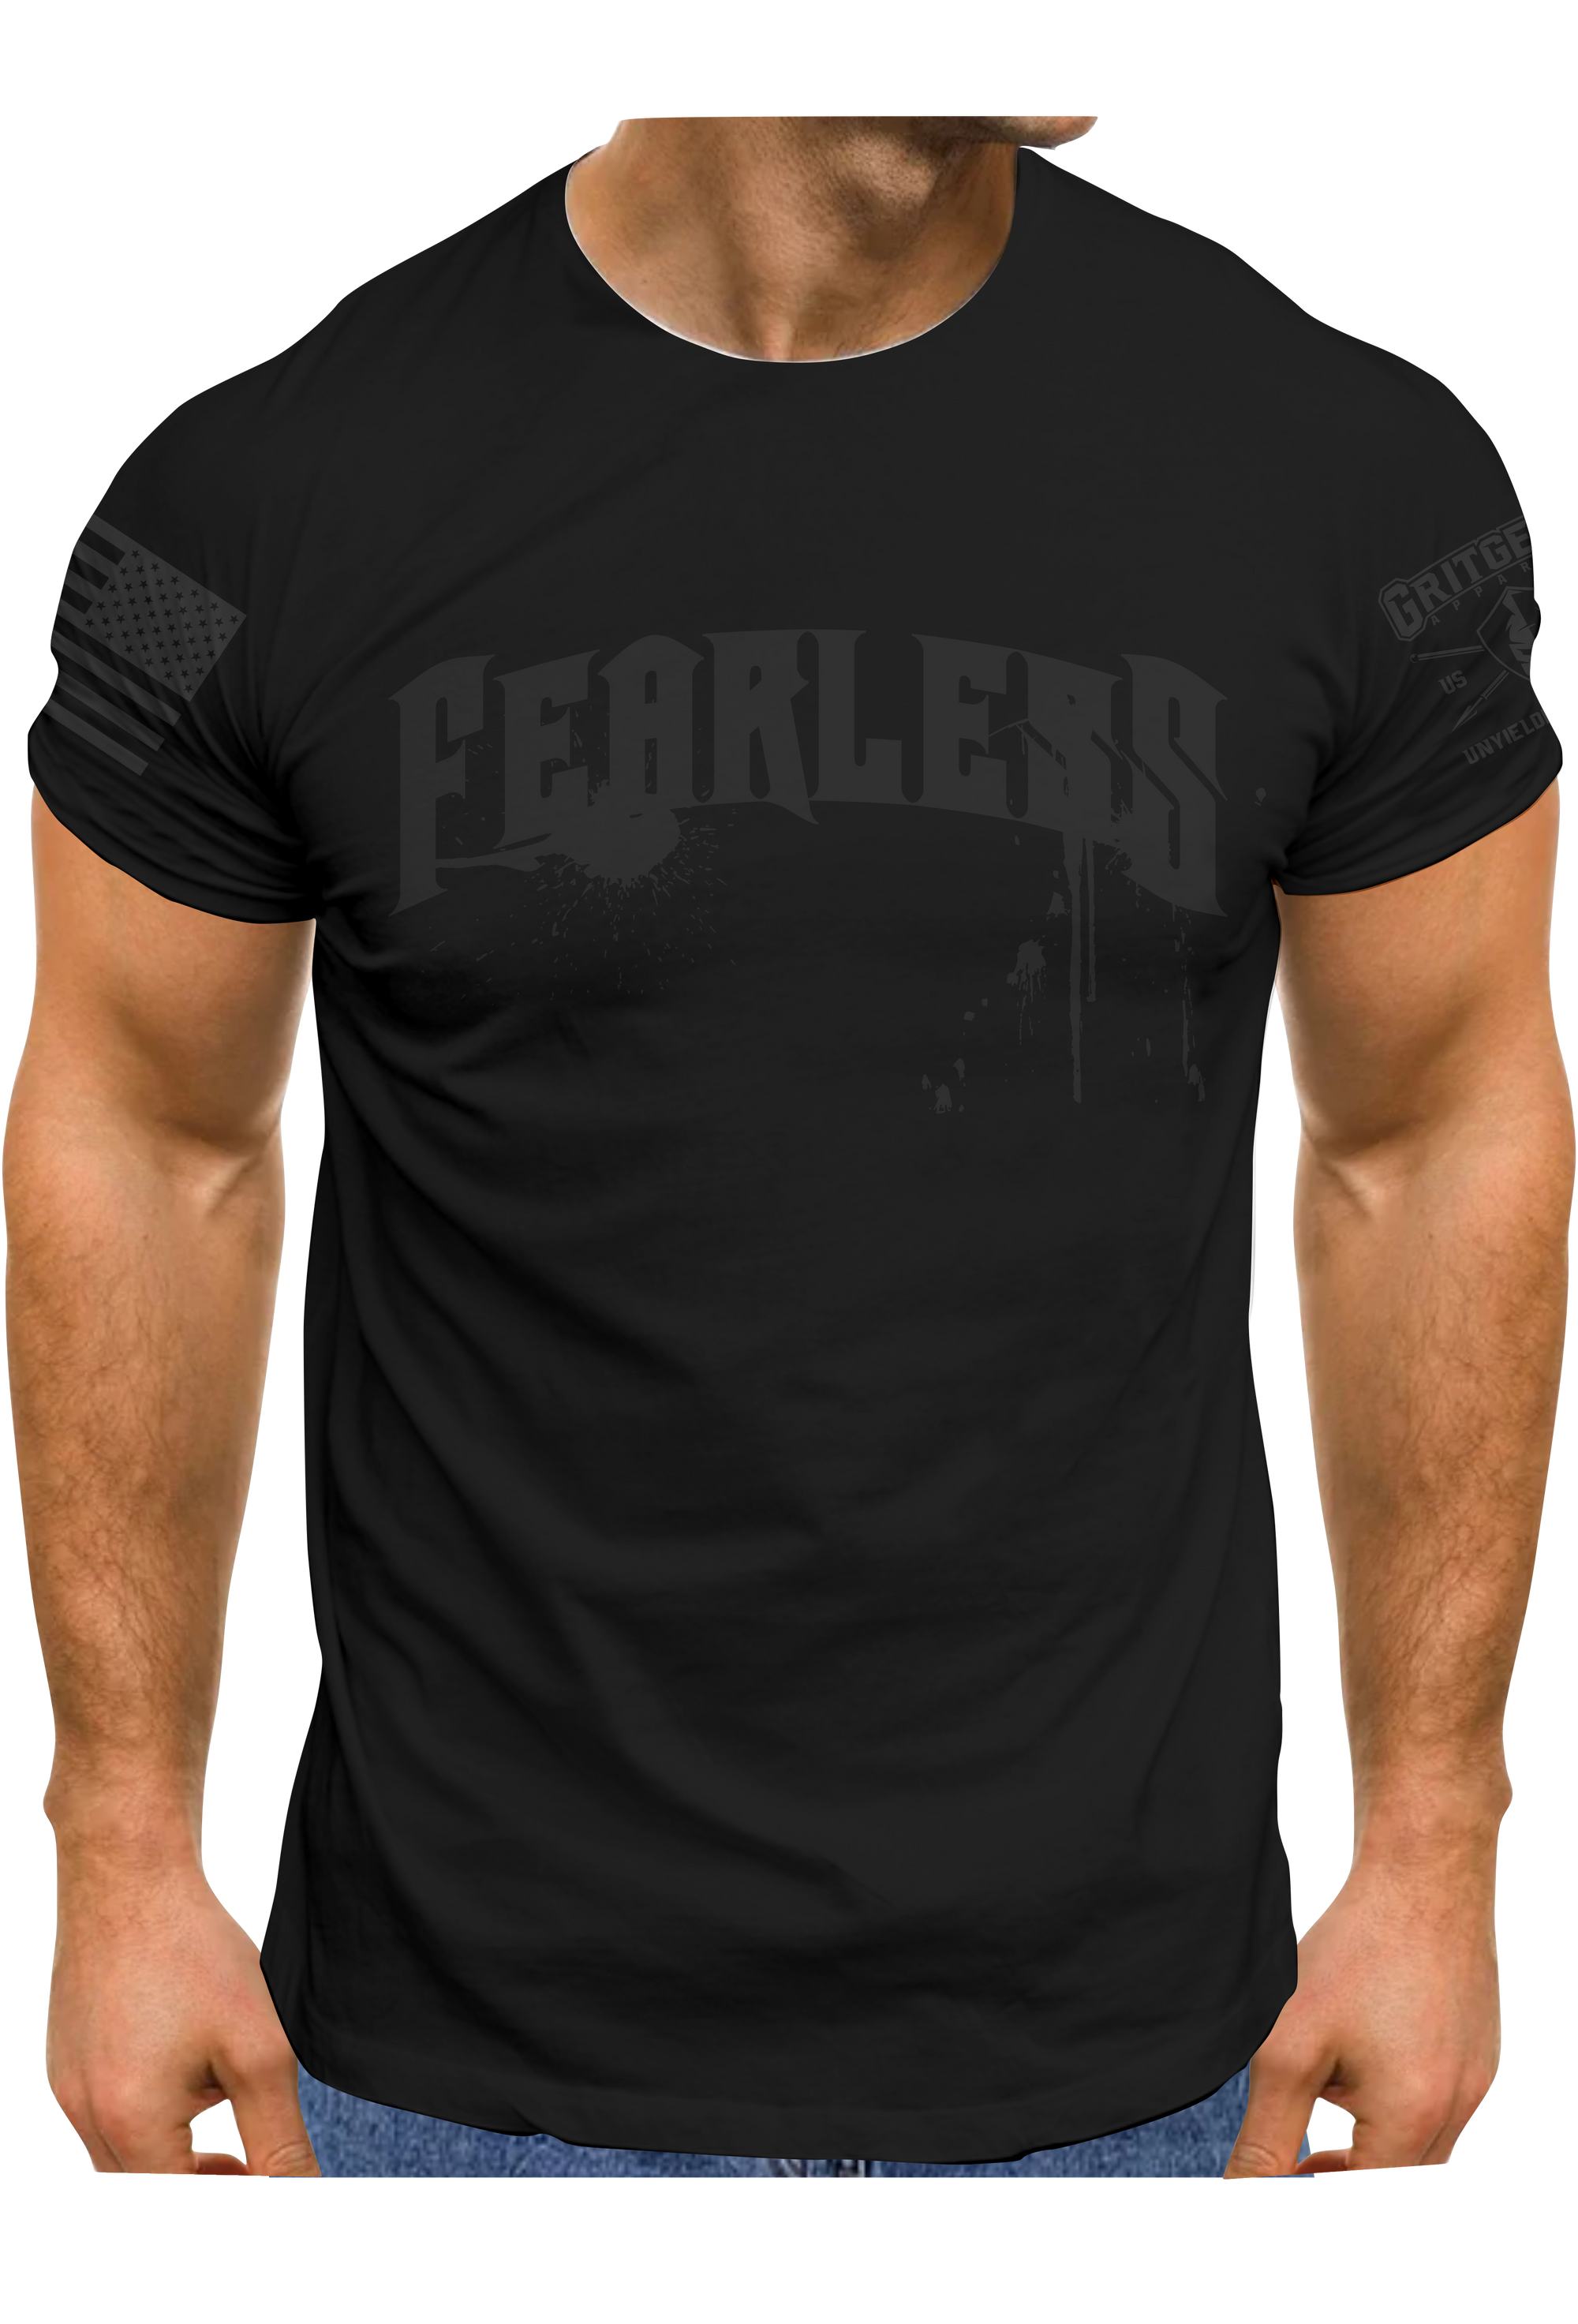 Fearless Black T-shirt | Grit Gear Apparel ®